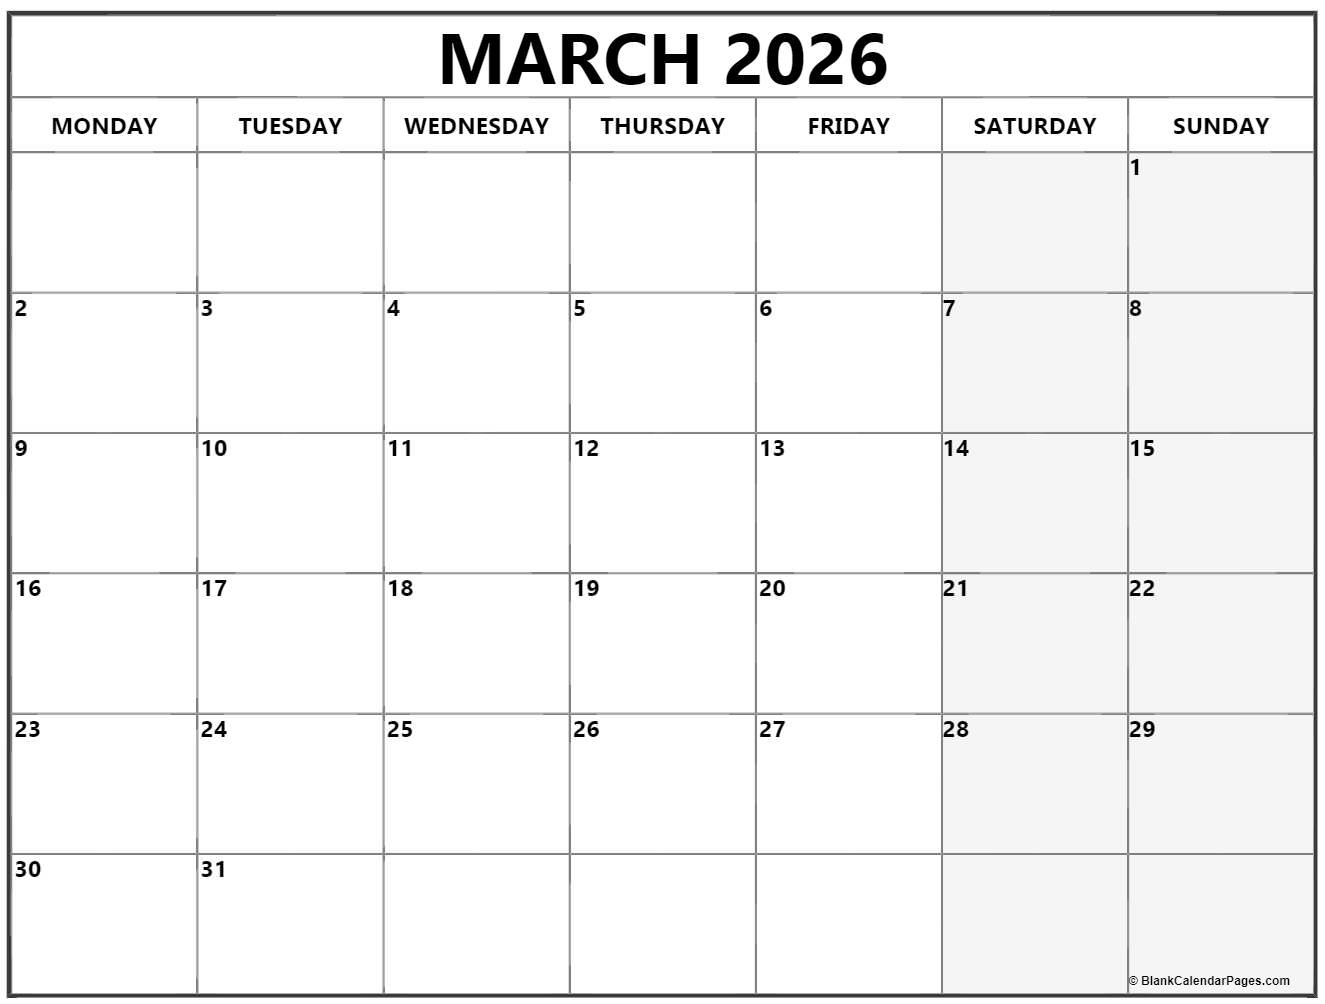 March 2026 Monday calendar. Monday to Sunday